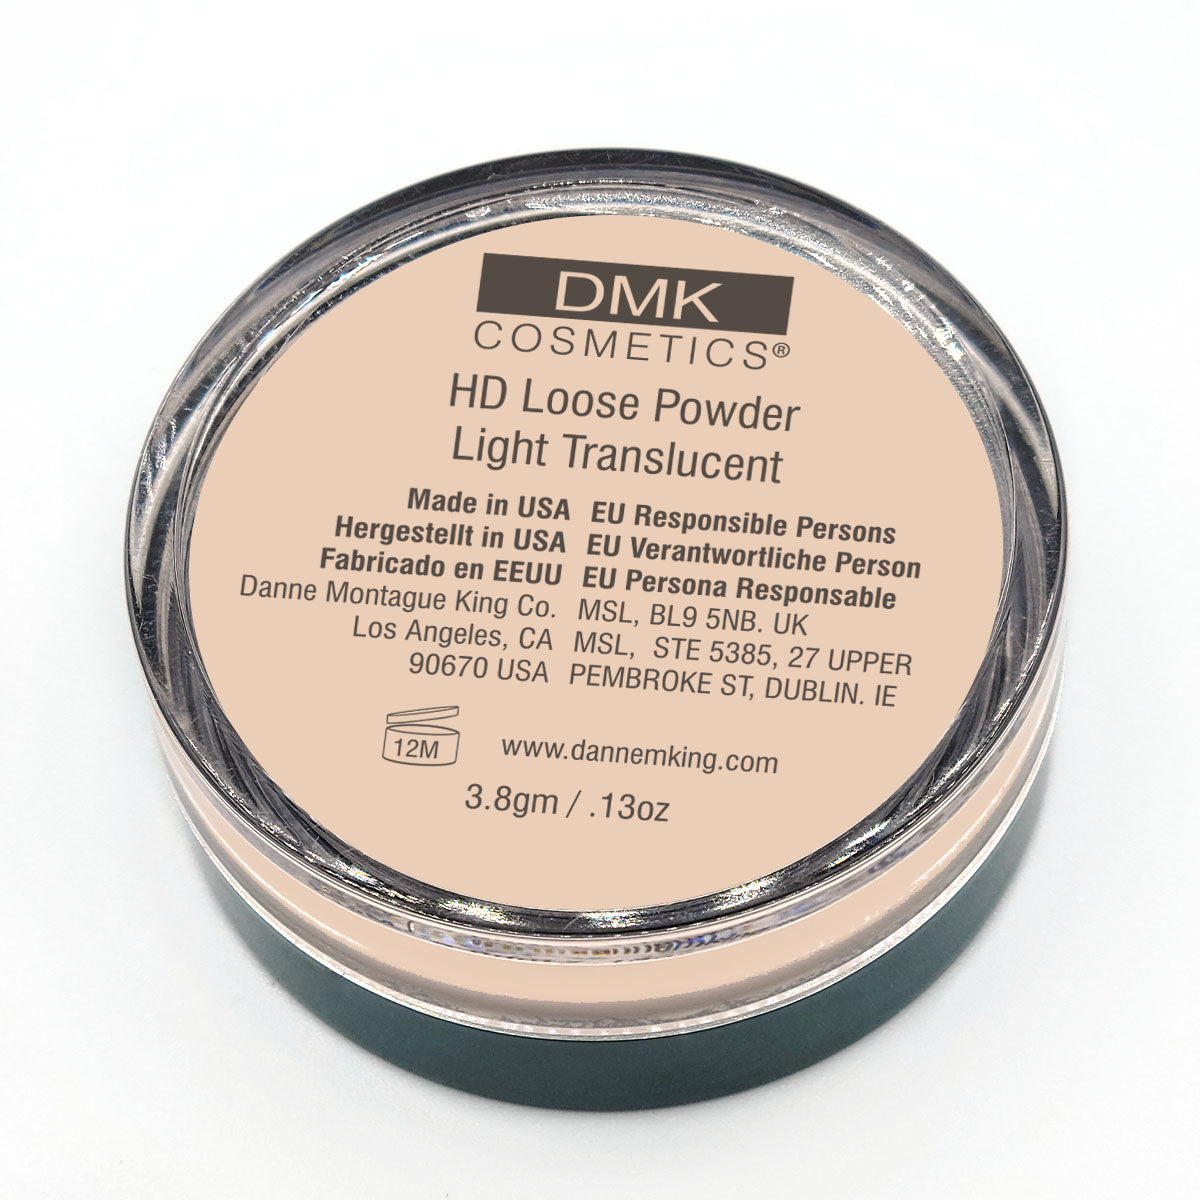 DMKC HD Loose Powder – Light Translucent